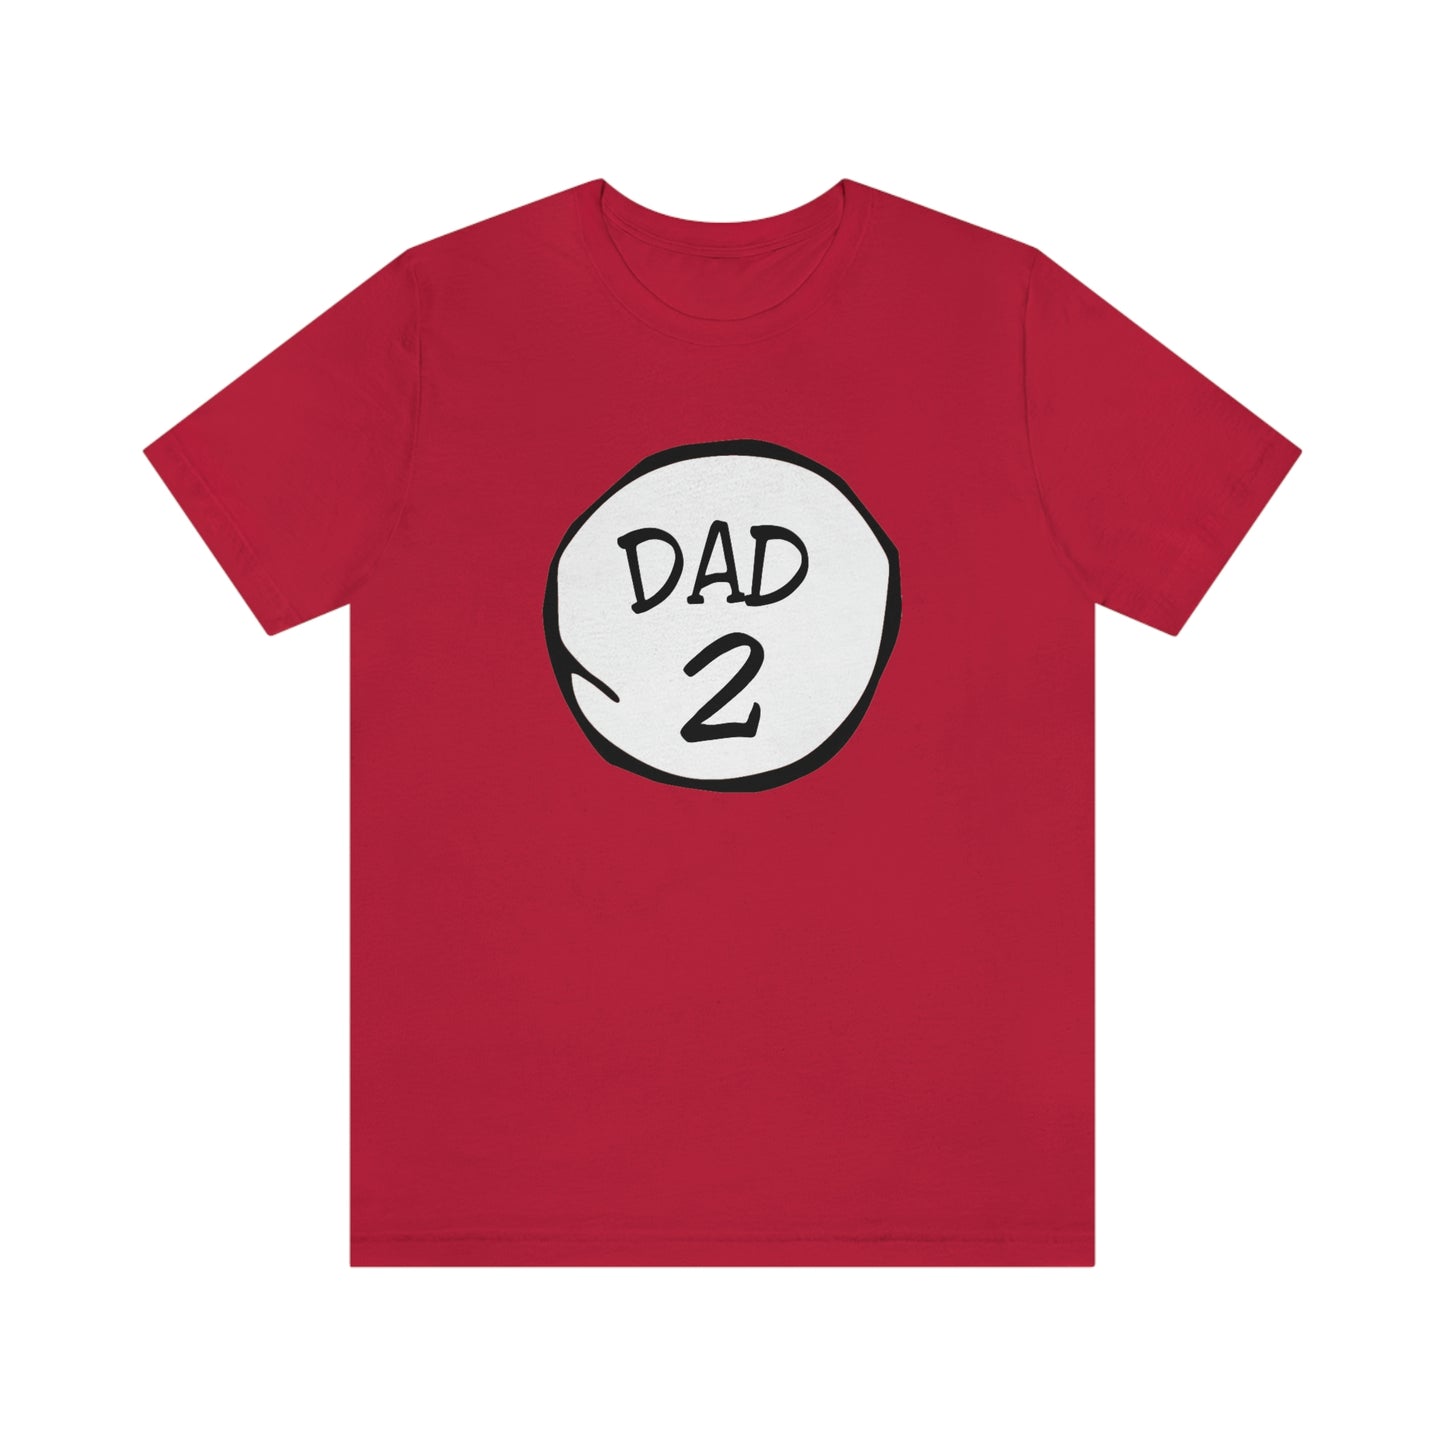 DAD 2 Adult T-Shirt